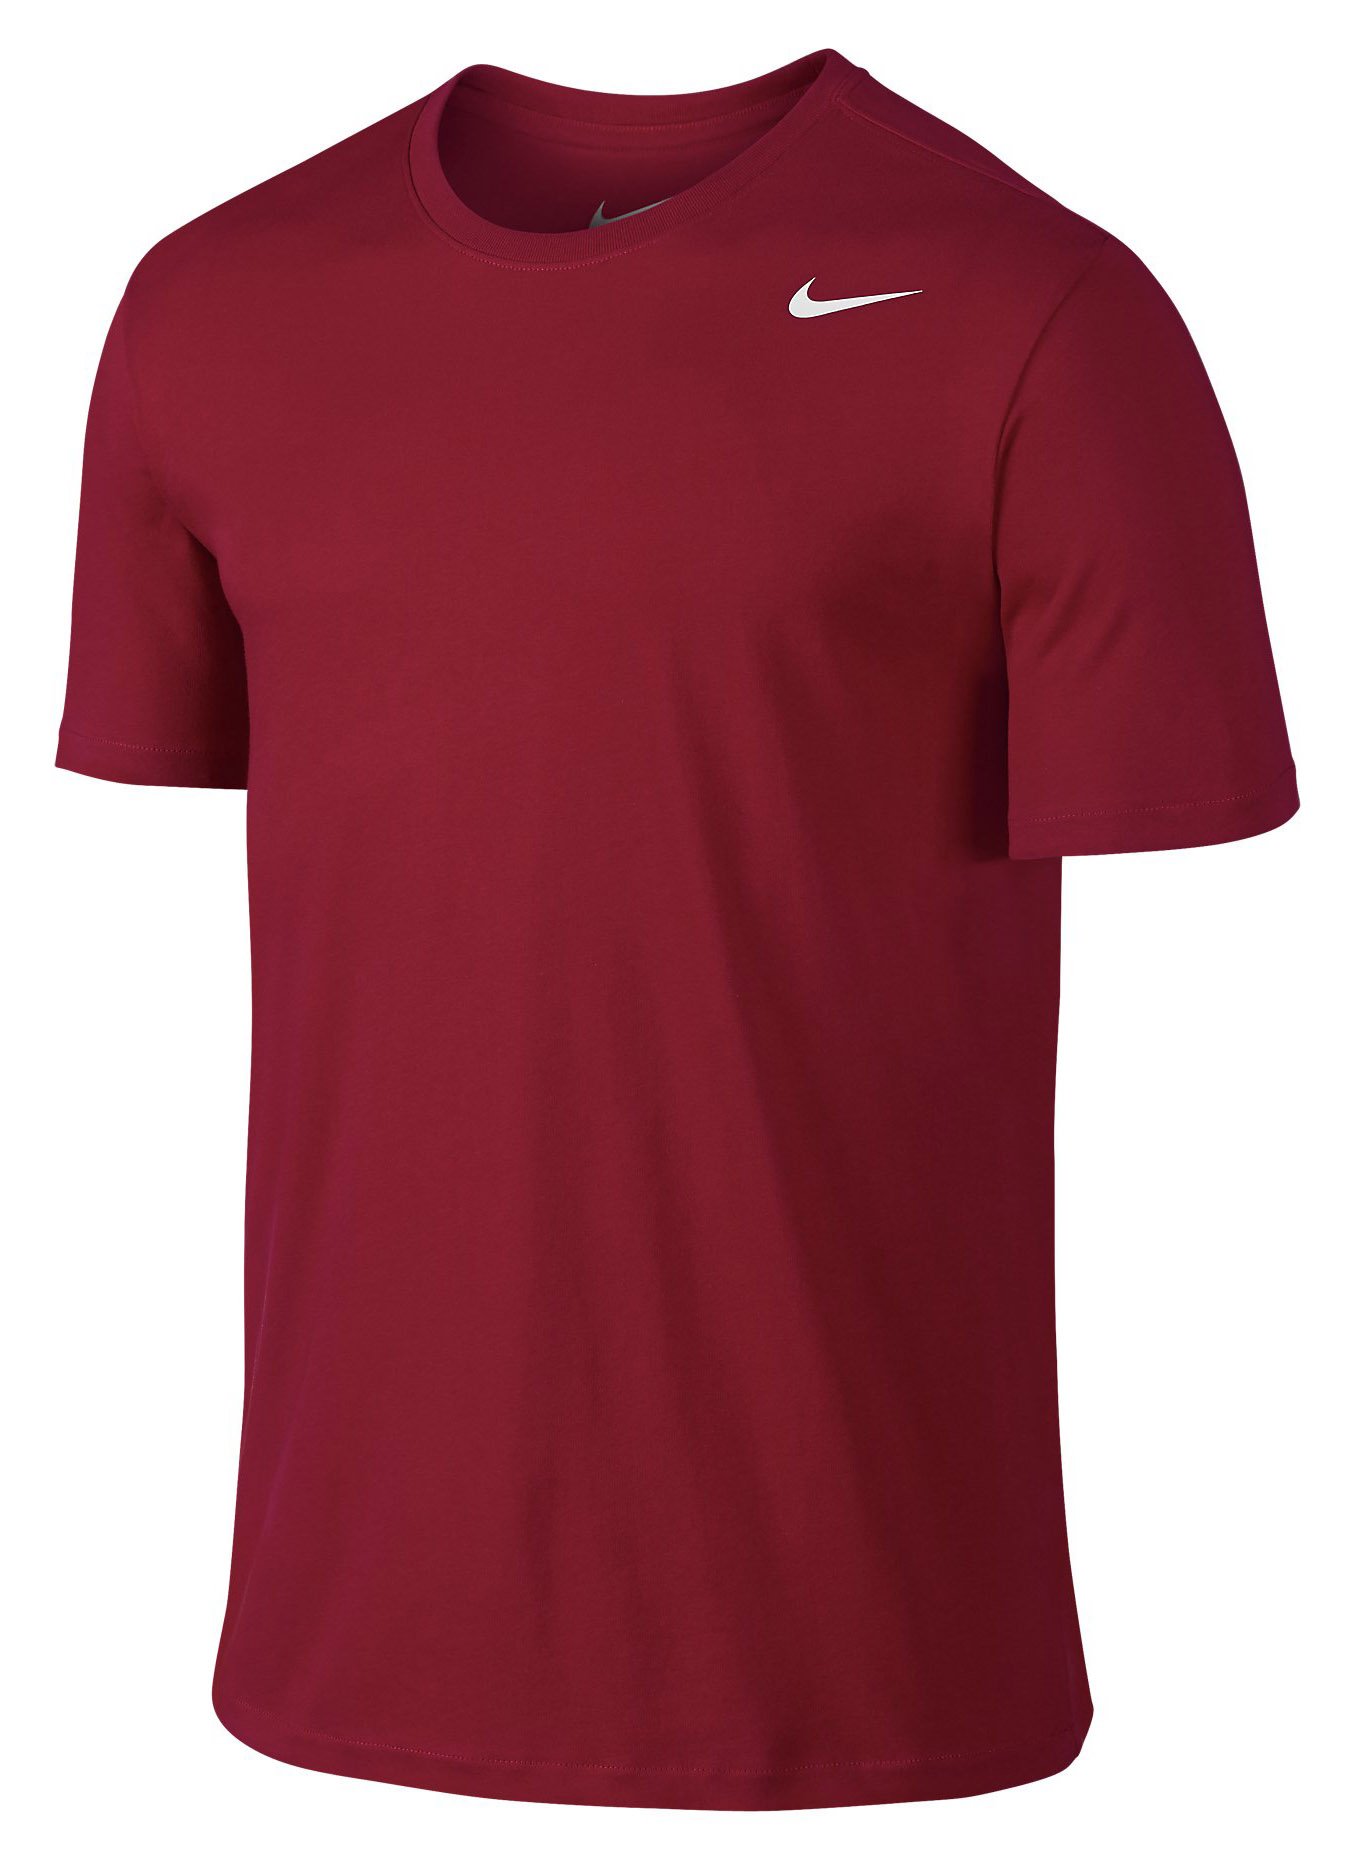 Pánské fitness triko s krátkým rukávem Nike Dry